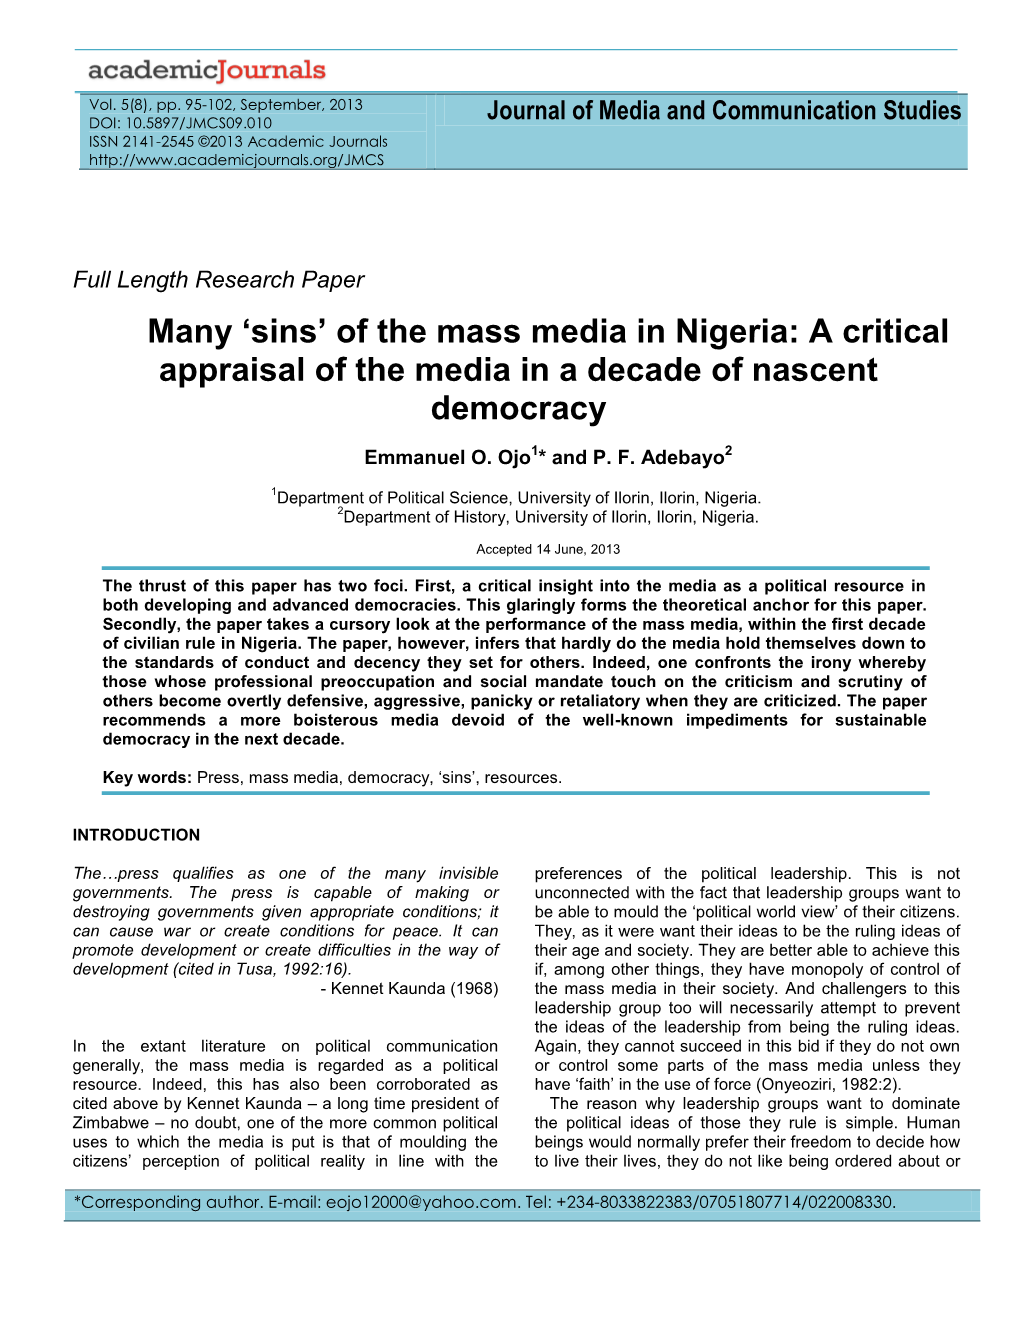 Many 'Sins' of the Mass Media in Nigeria